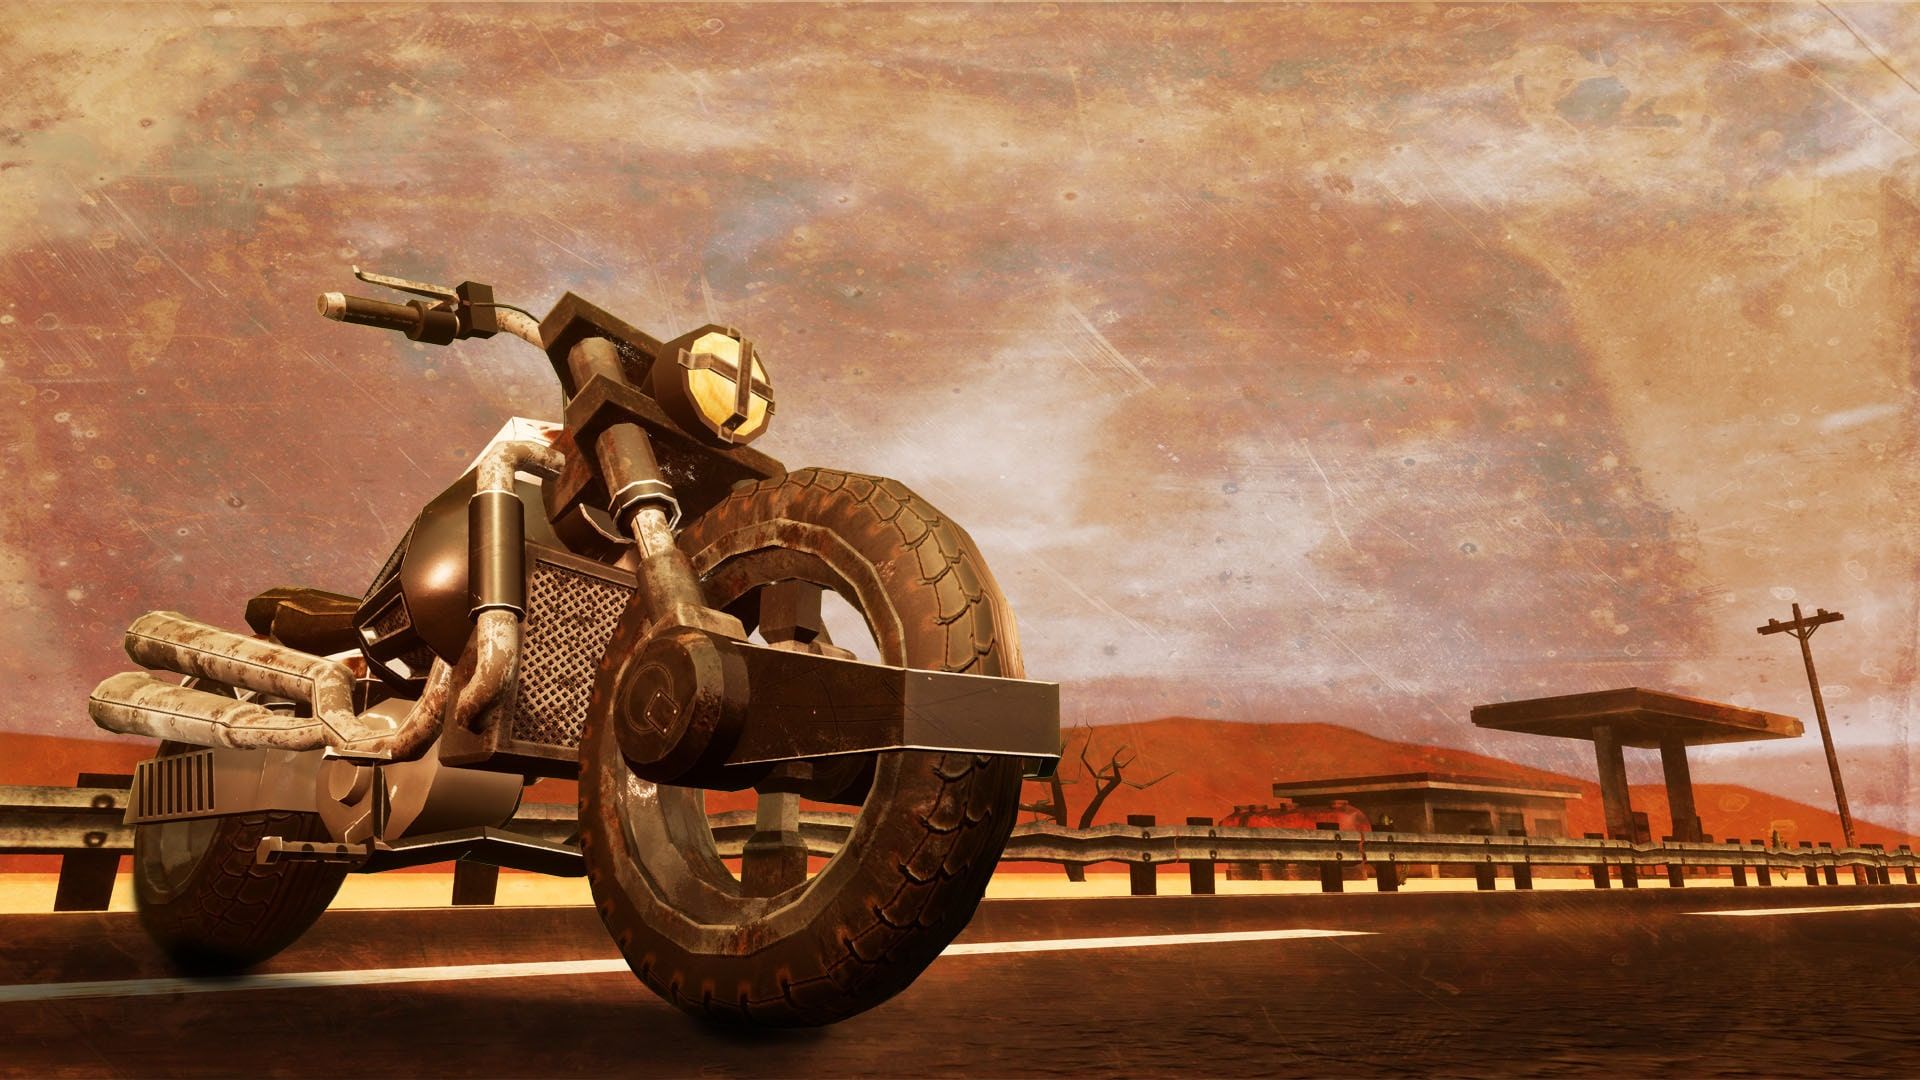 Apocalypse Rider cover image